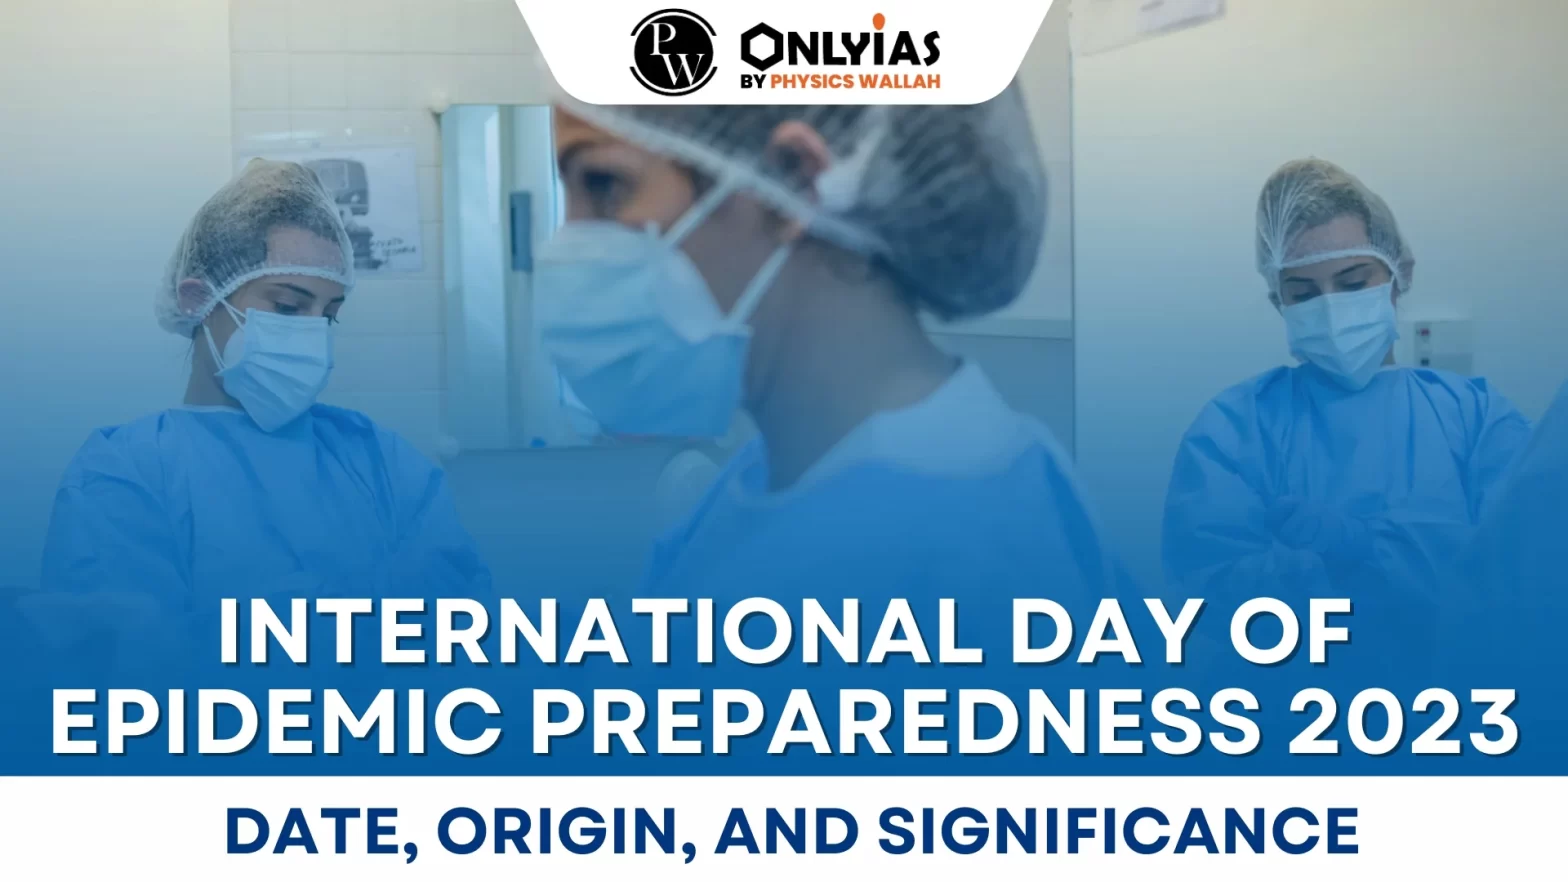 International Day of Epidemic Preparedness 2023: Date, Origin, and Significance